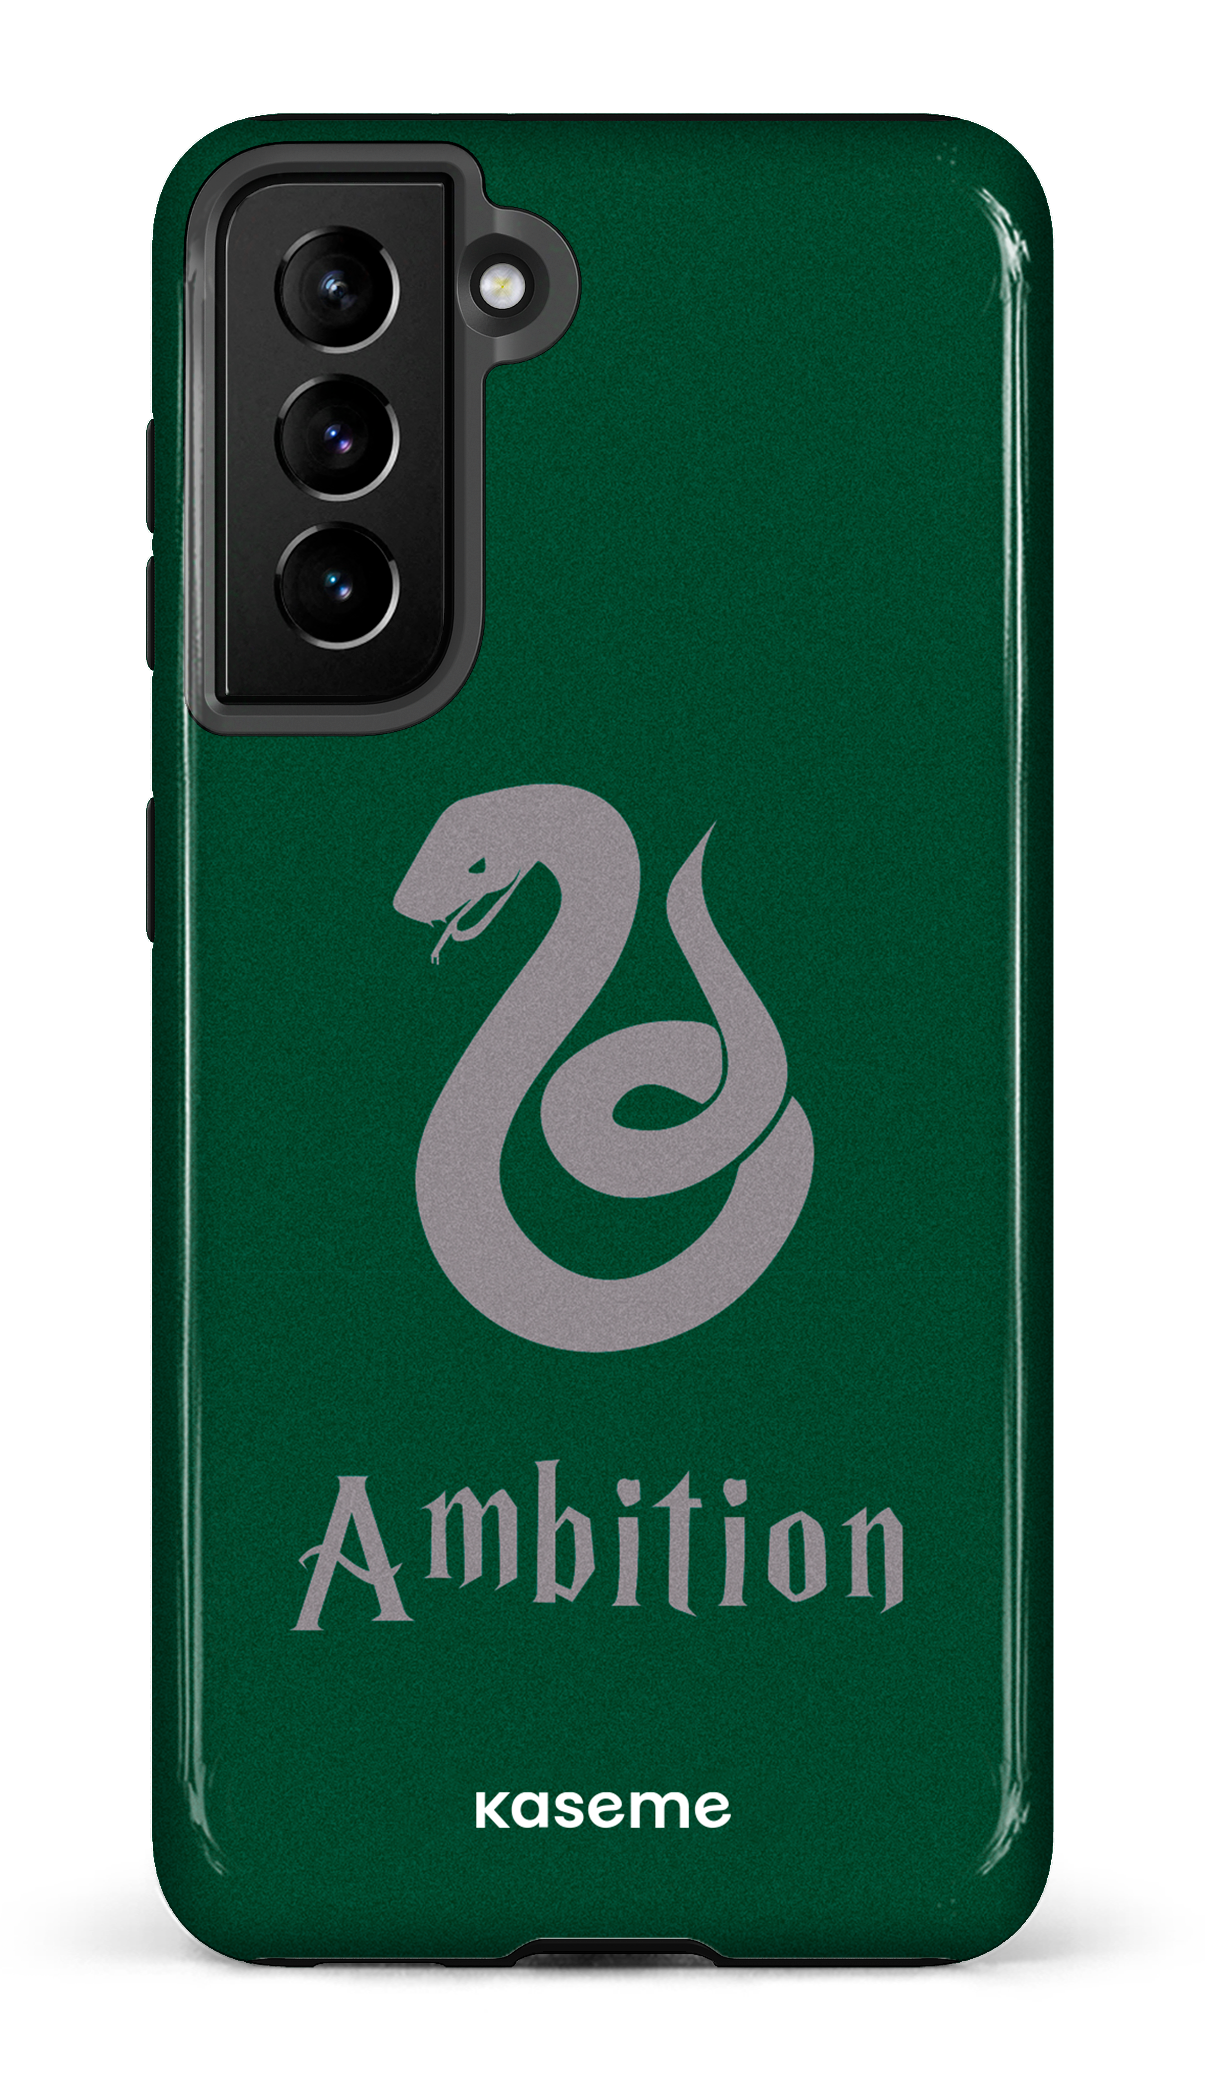 Ambition - Galaxy S21